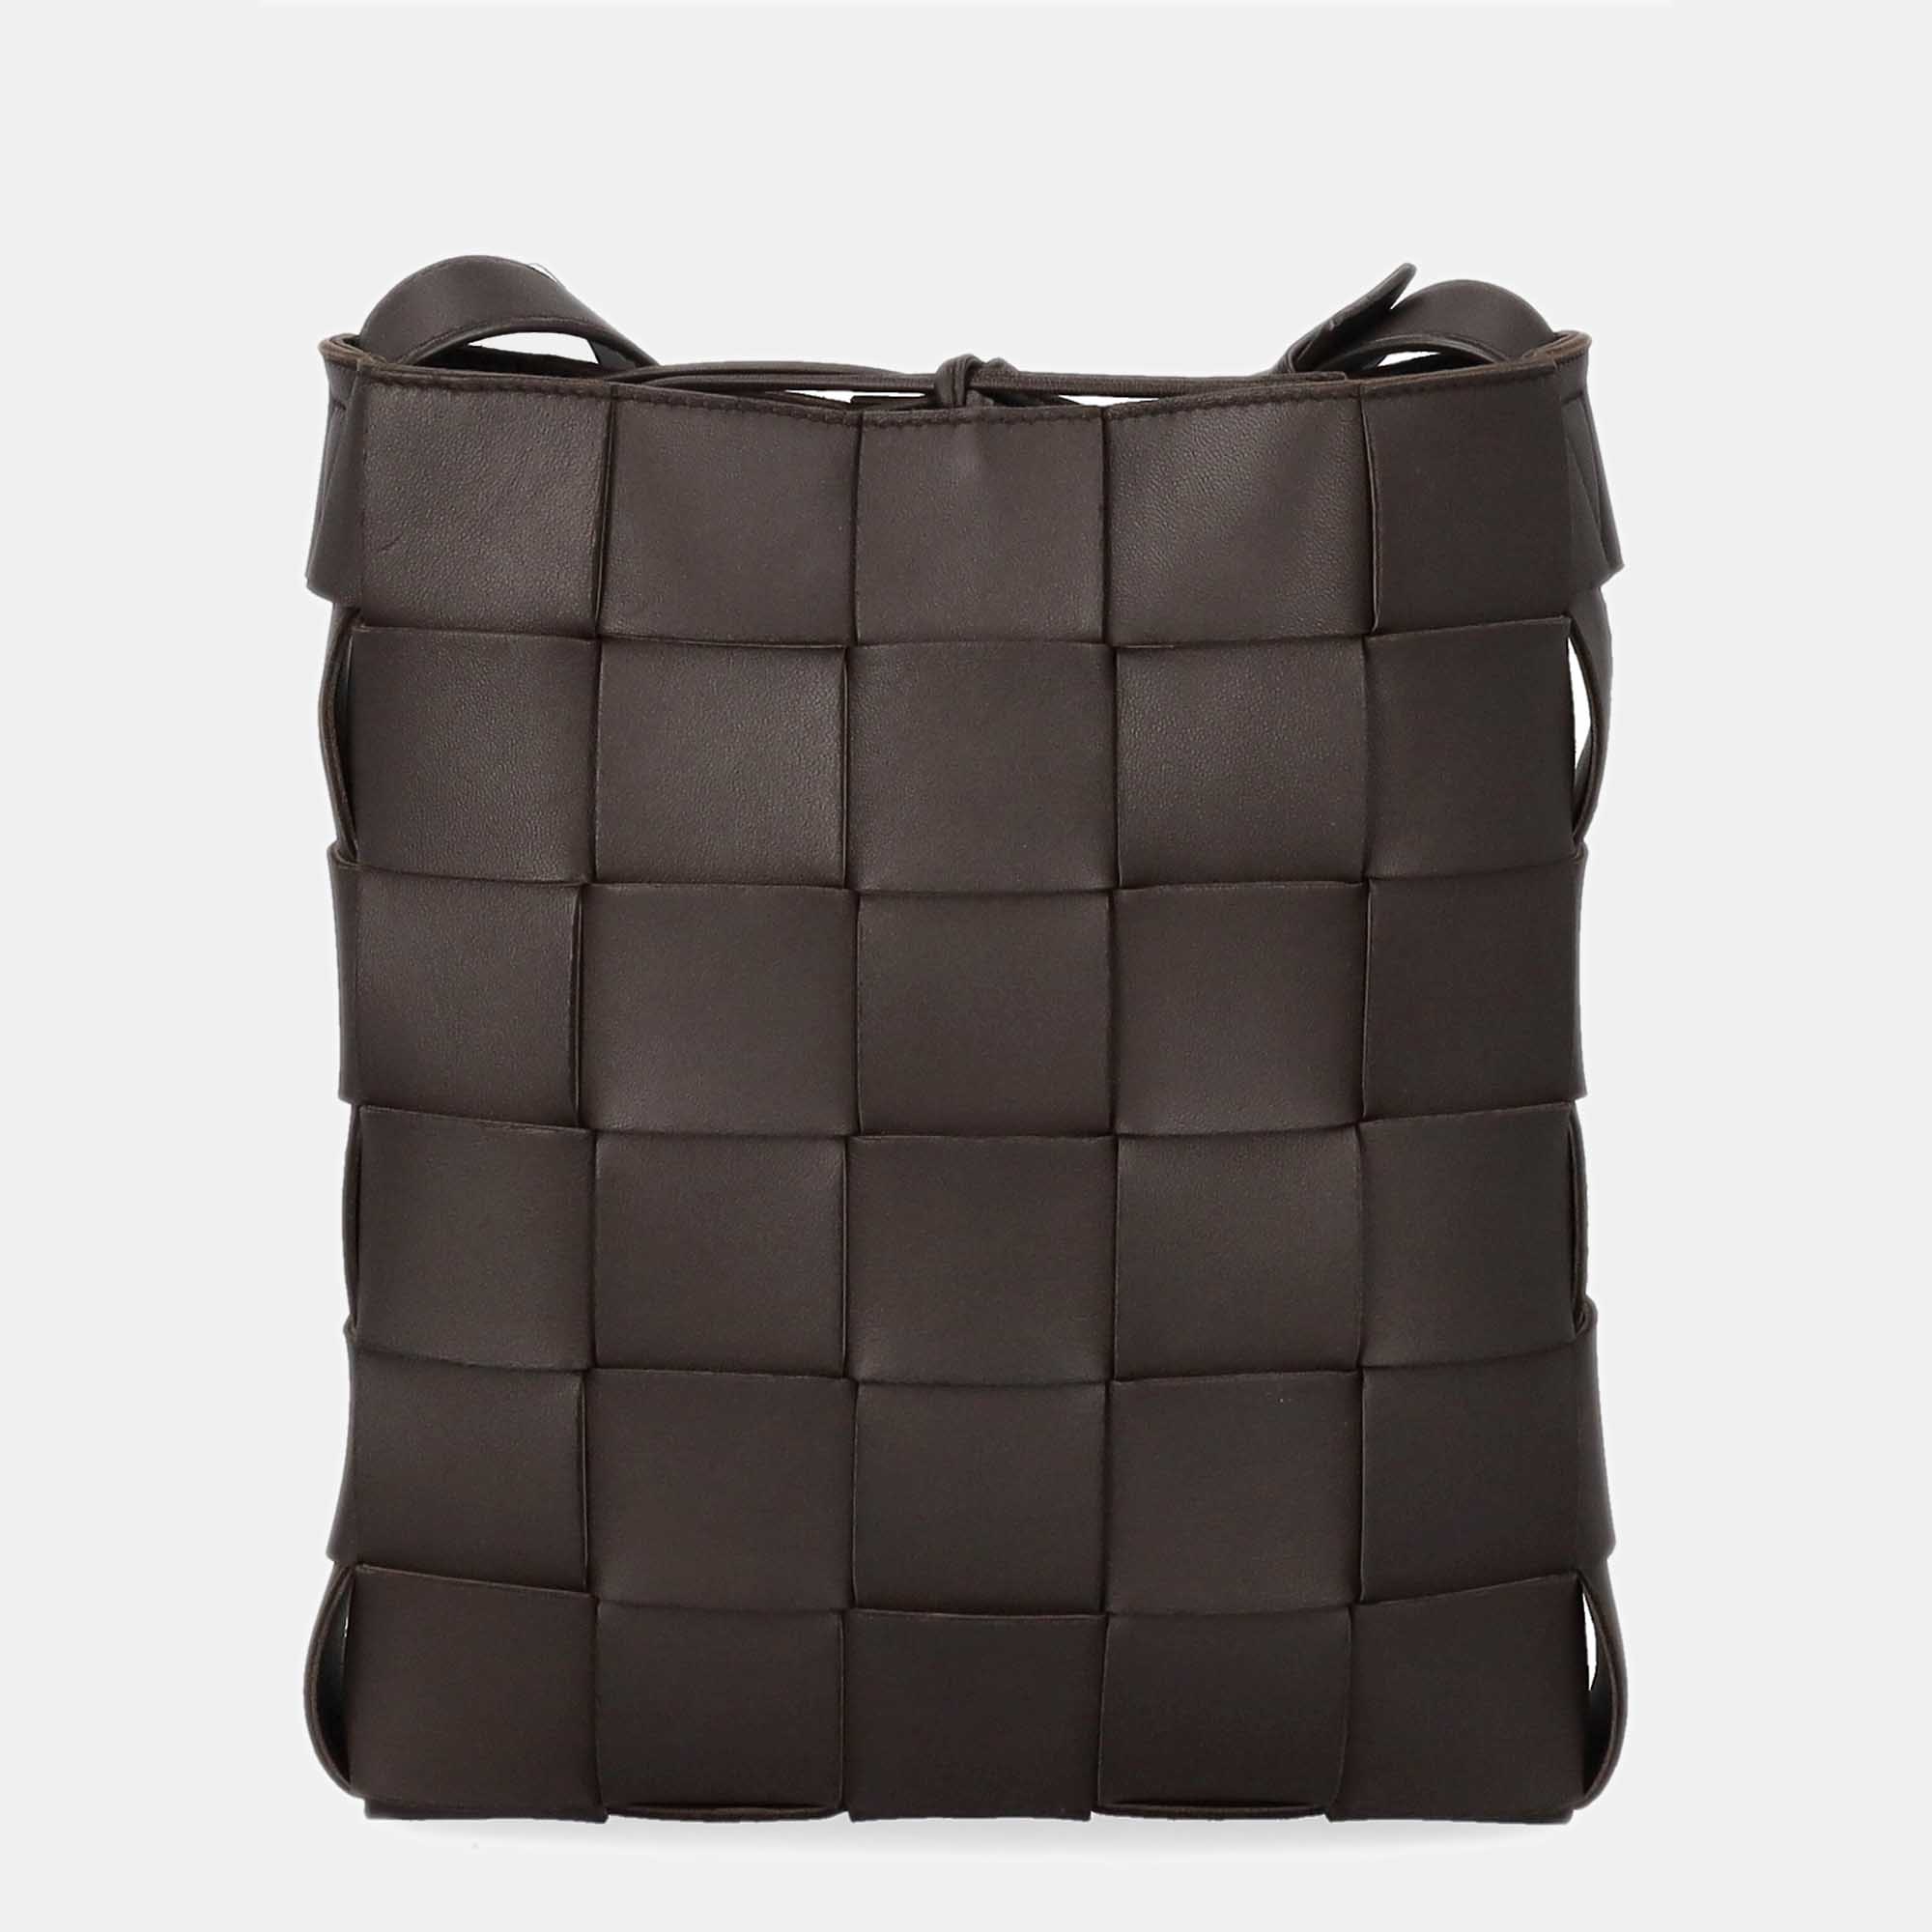 Bottega Veneta  Women's Leather Cross Body Bag - Brown - One Size